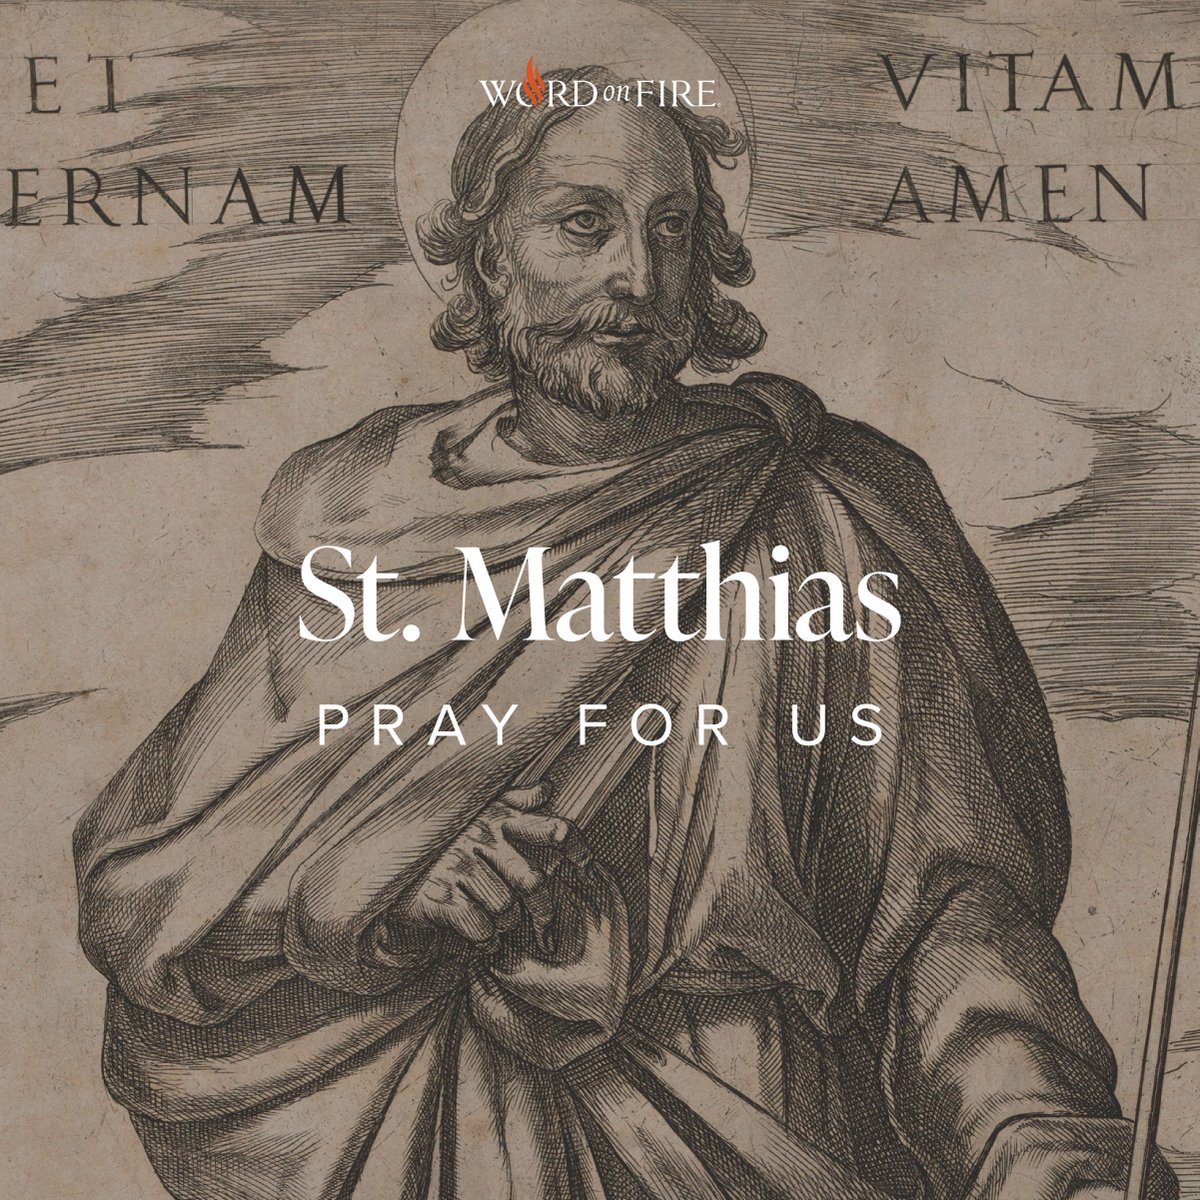 St. Matthias, pray for us!